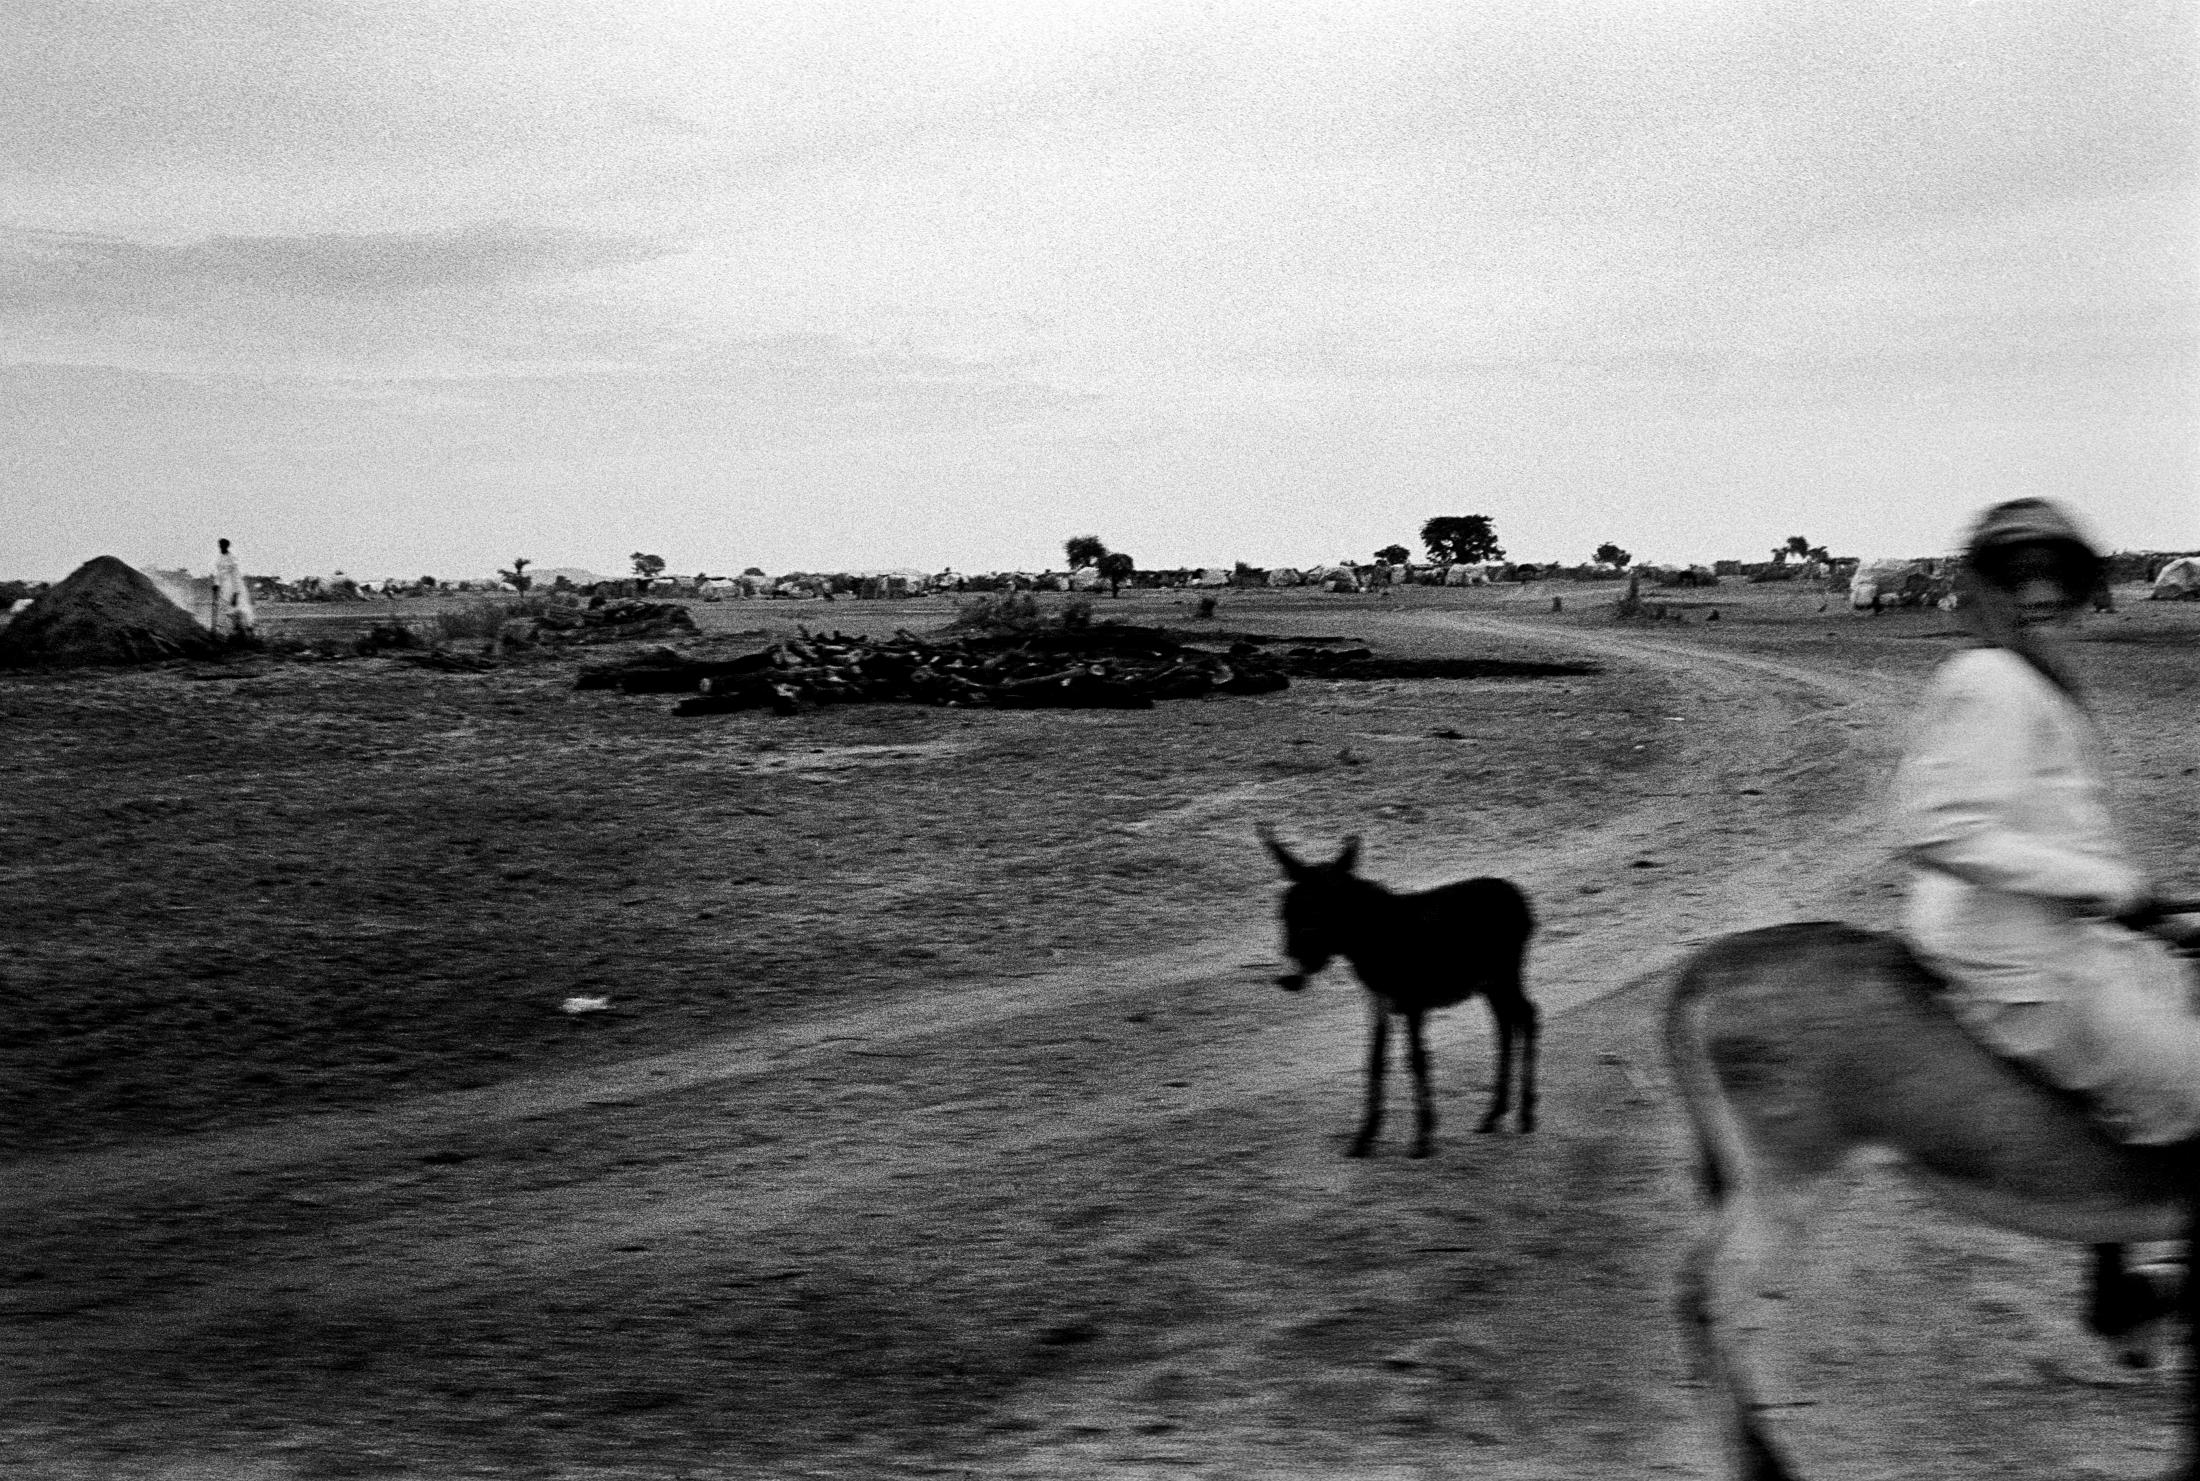 Darfur - SUDAN Nyala, South Darfur On the road from Nyala to Kalma...